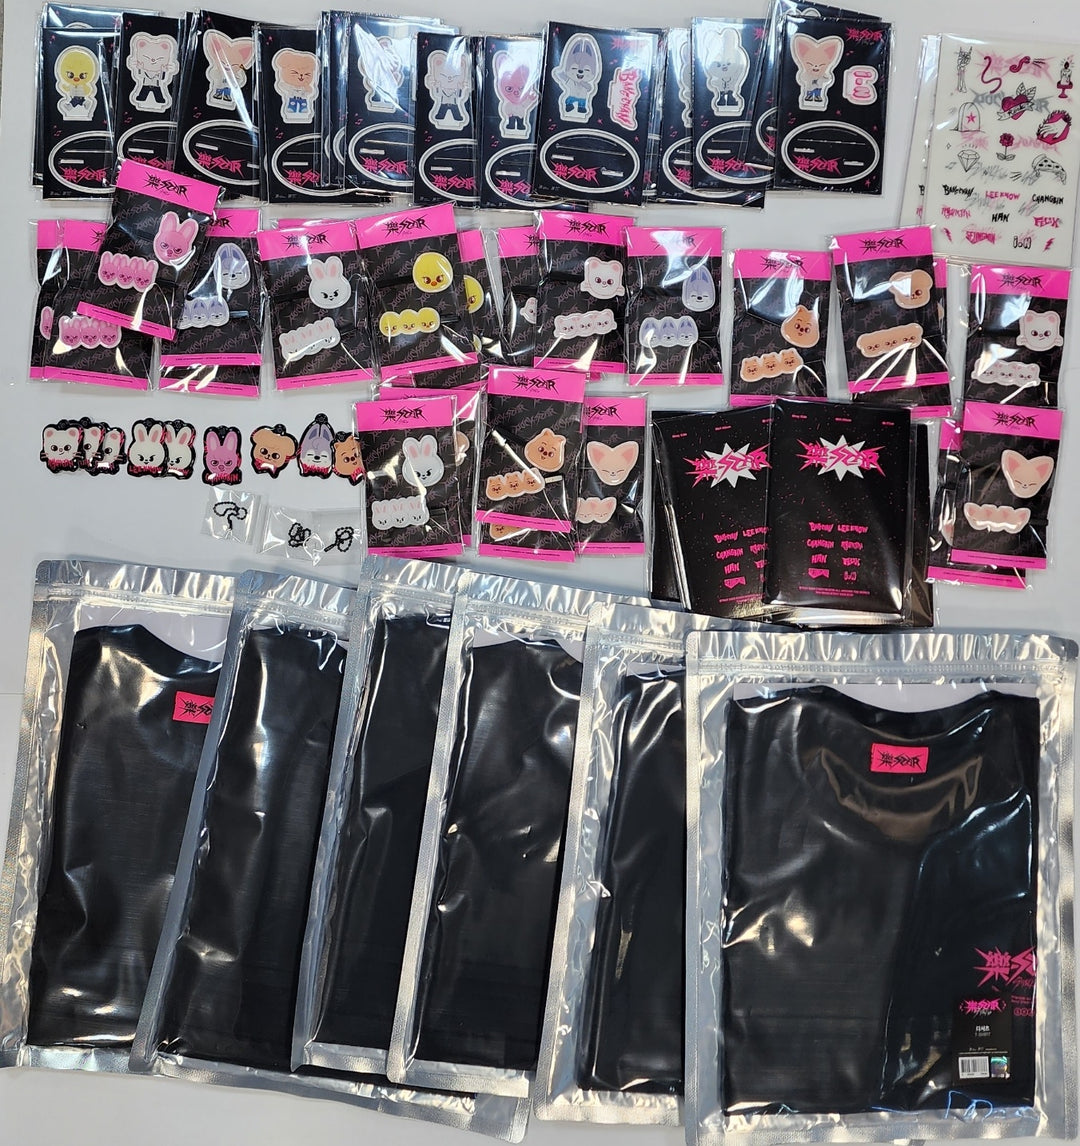 Stray Kids "樂-Star" - Pop-Up Store Official MD [ステッカーブック、タトゥーステッカーセット、Tシャツ、キーホルダー、フォトカードスタンド、ヘアピン] [23.11.13]